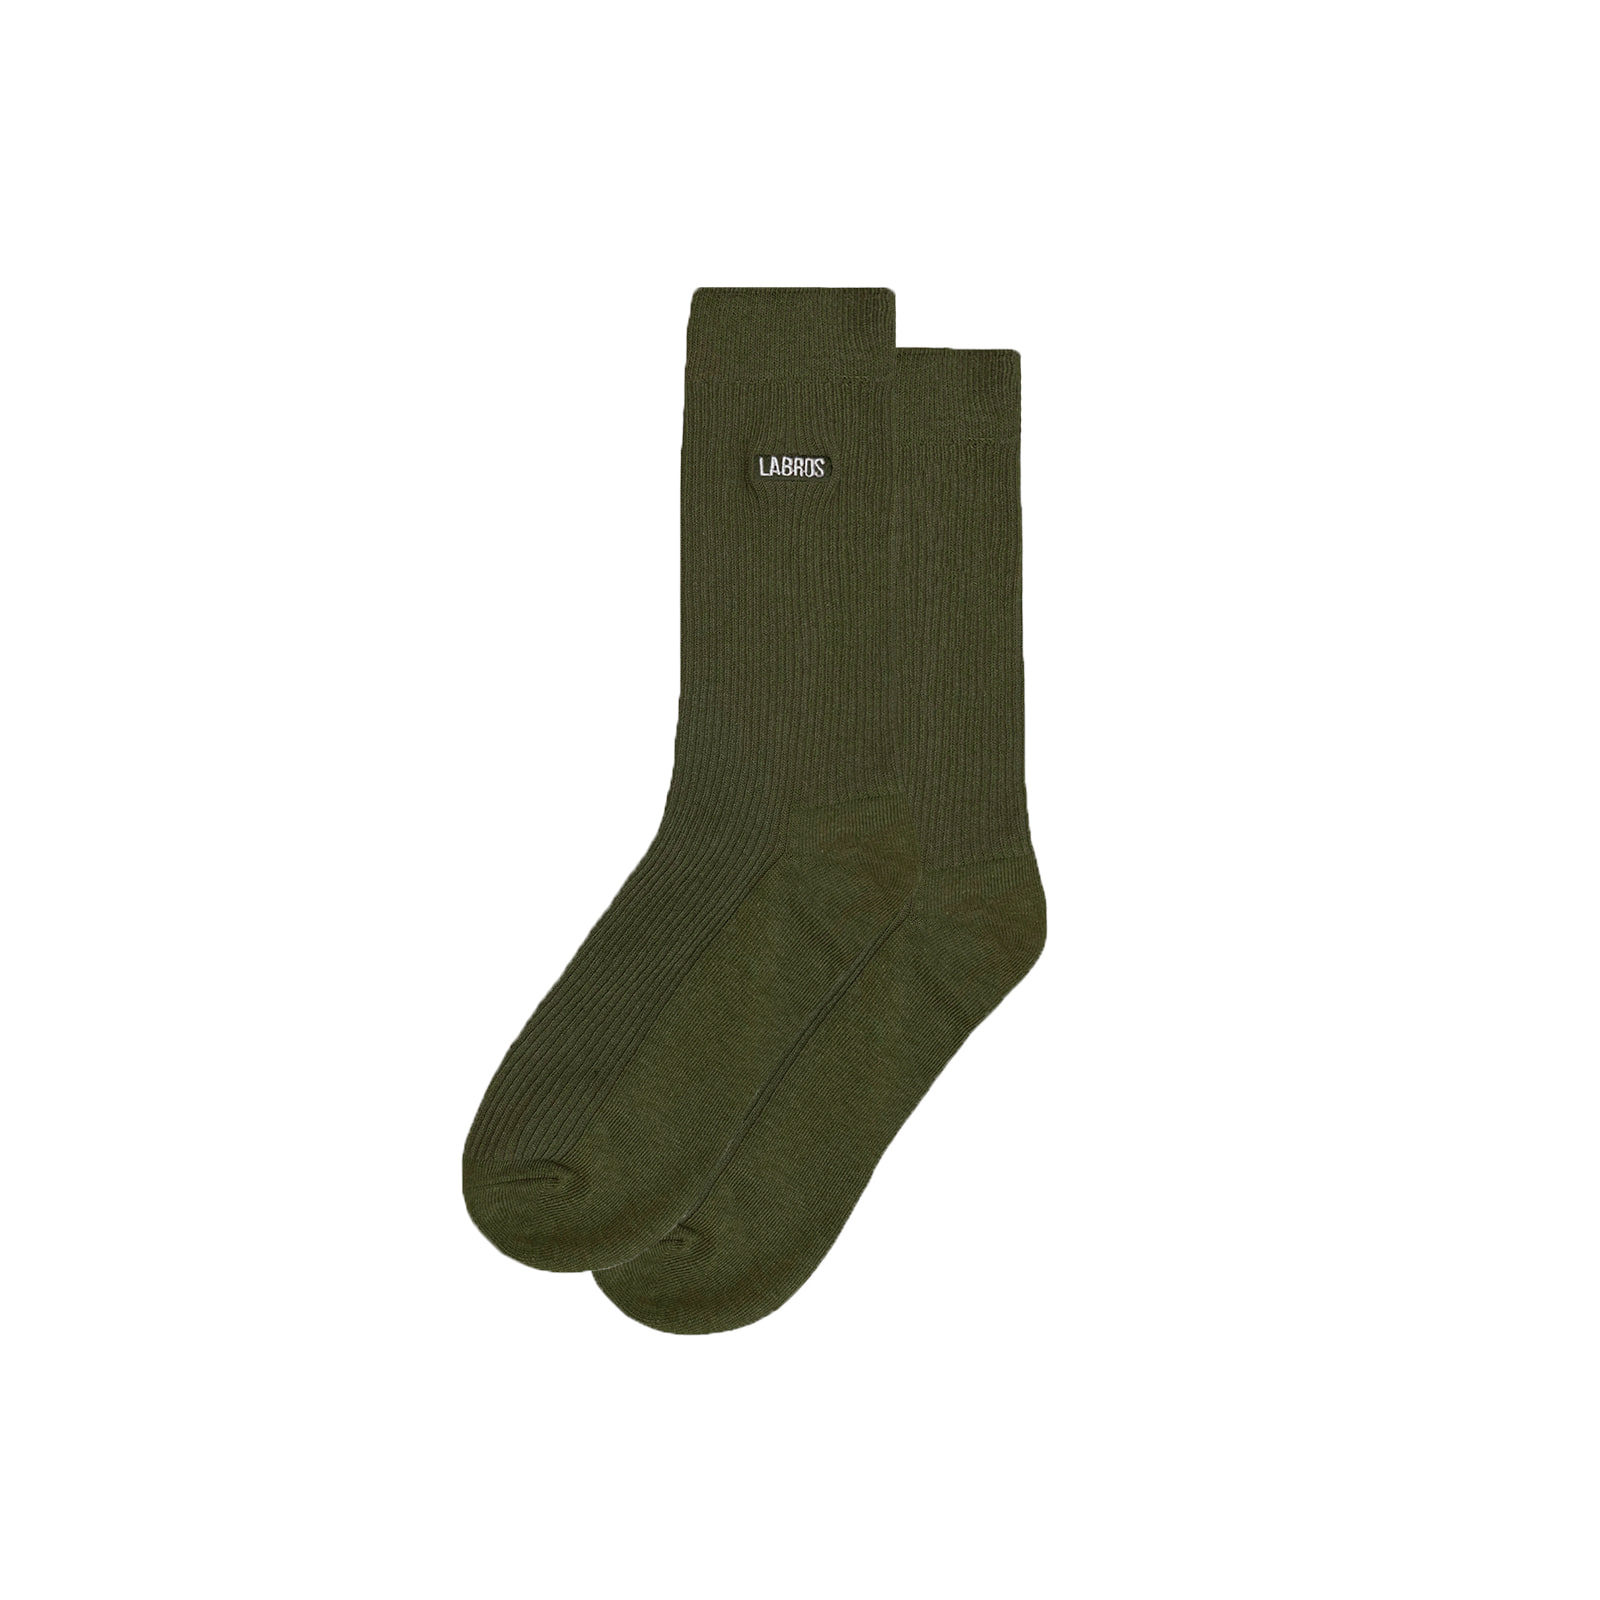 Box Logo Socks (Olive)